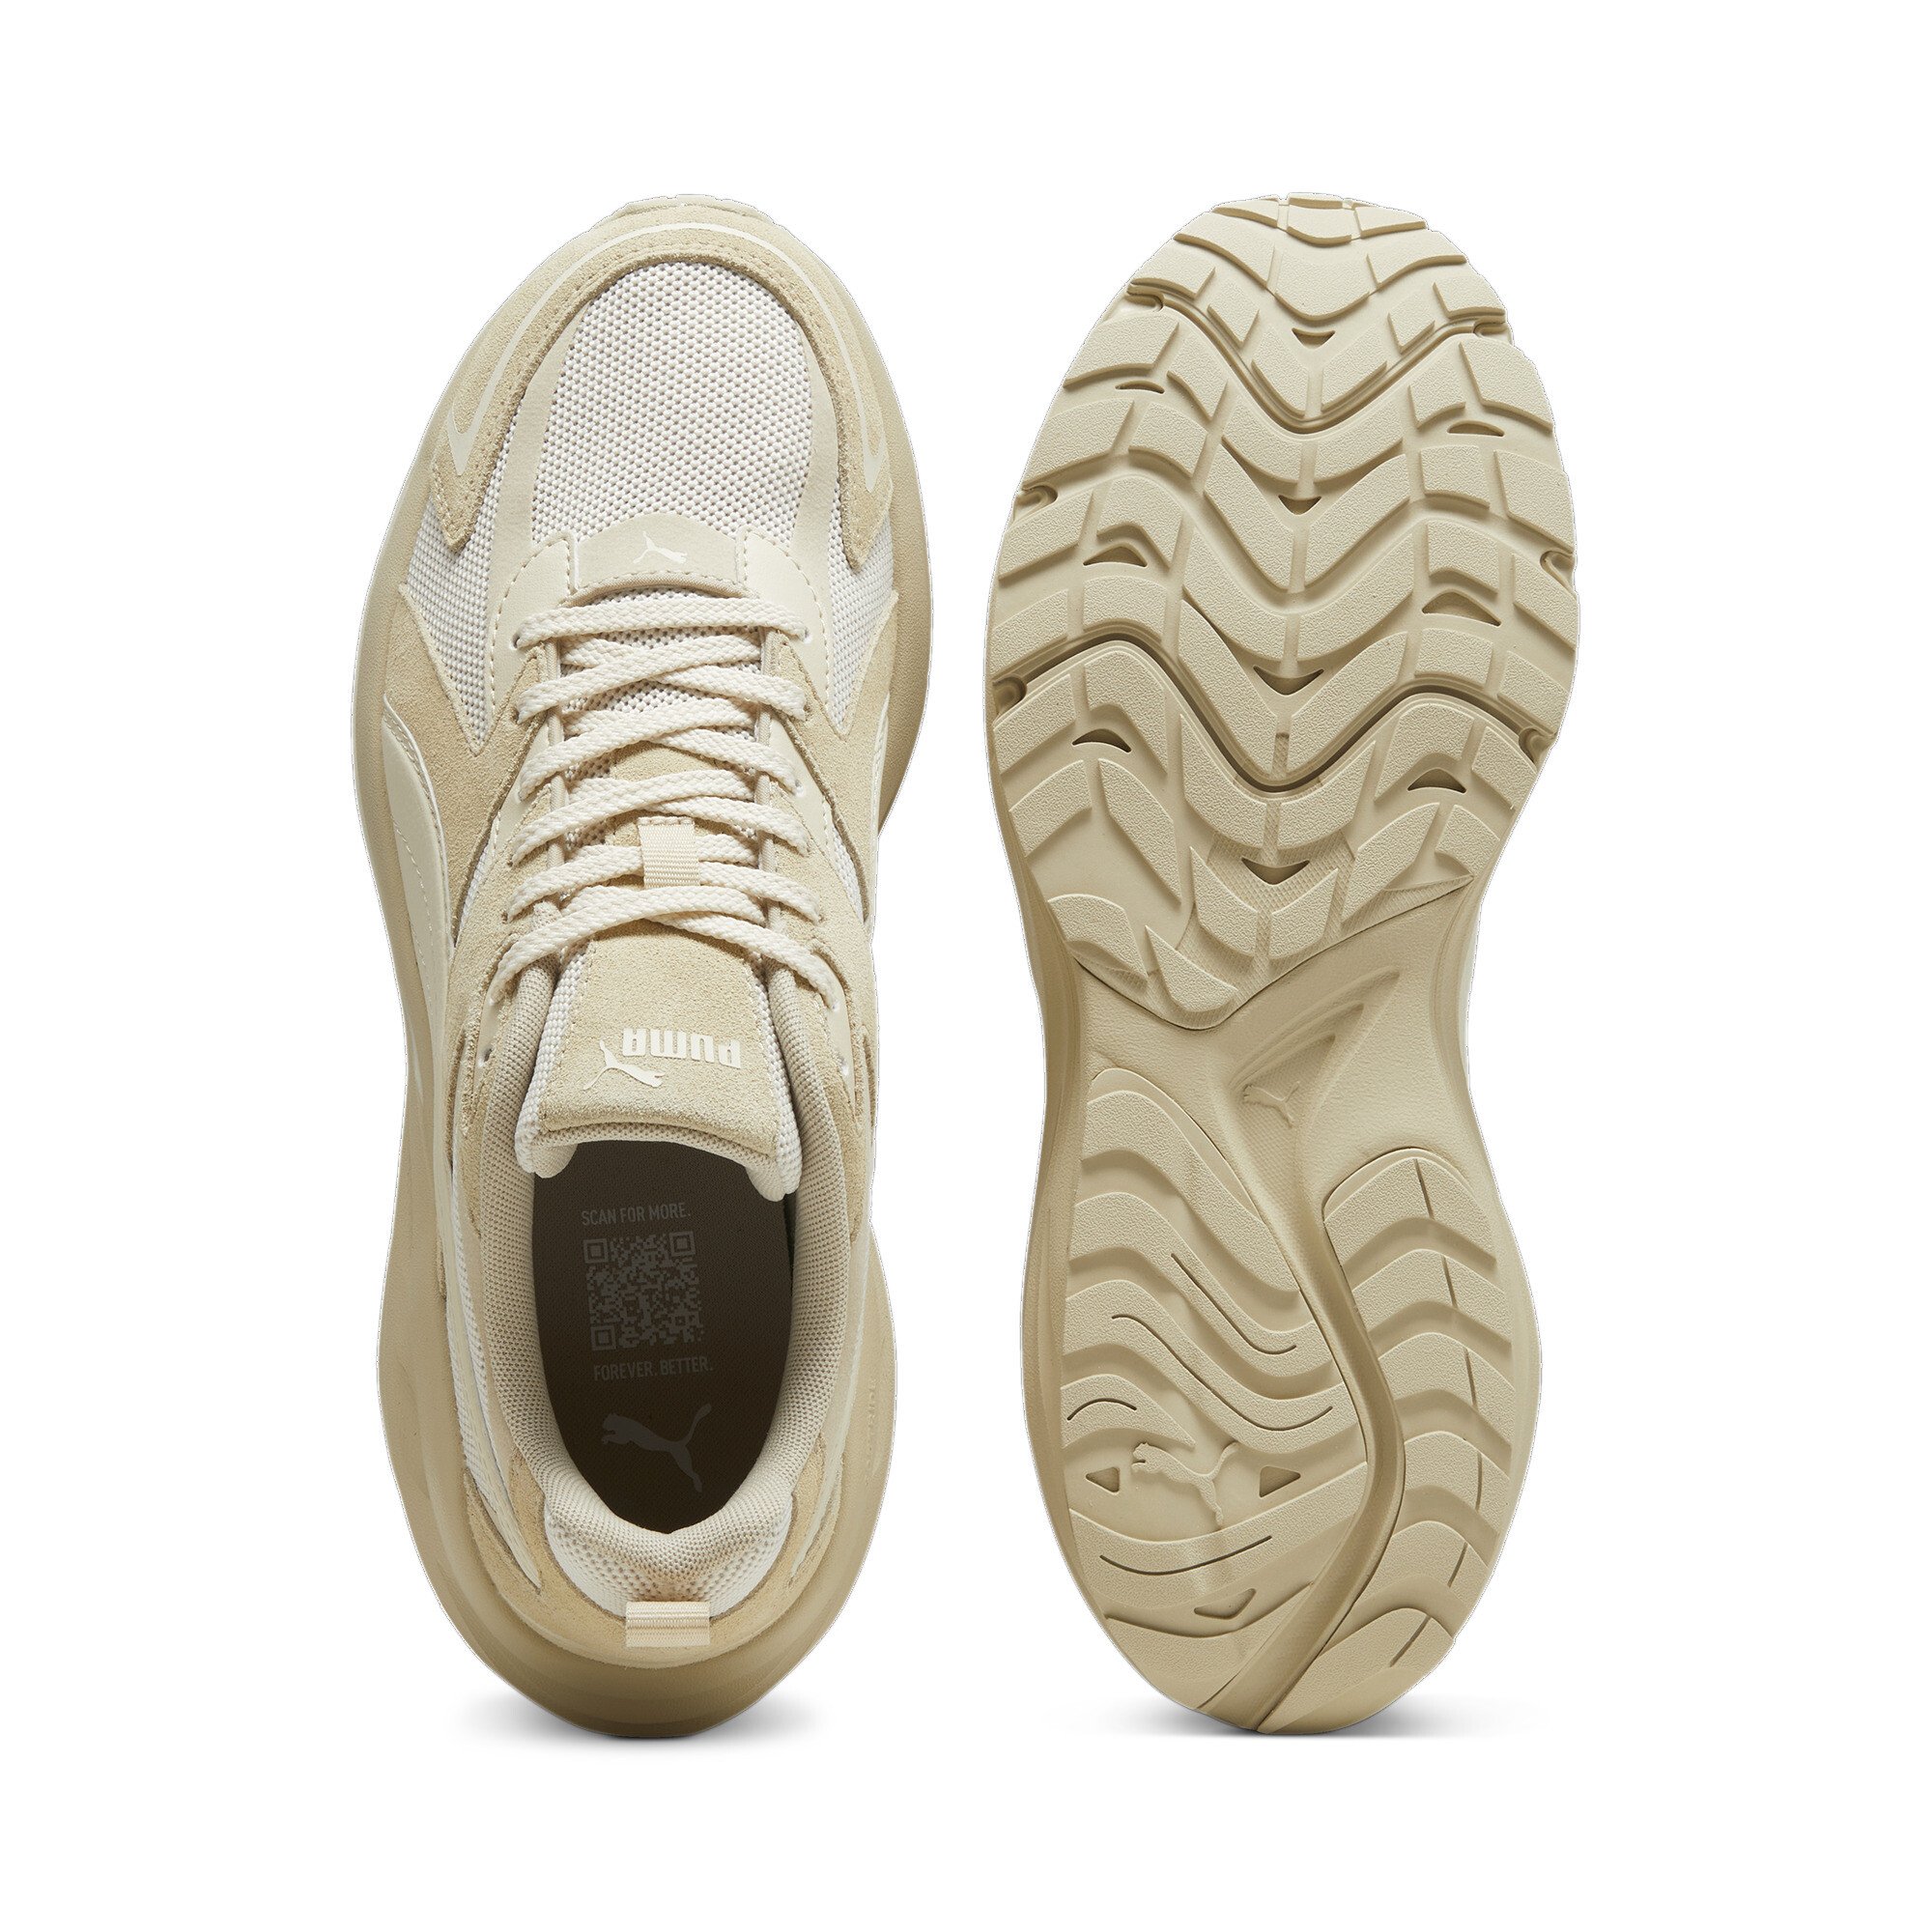 Puma Hypnotic LS Sneakers, Beige, Size 41, Shoes